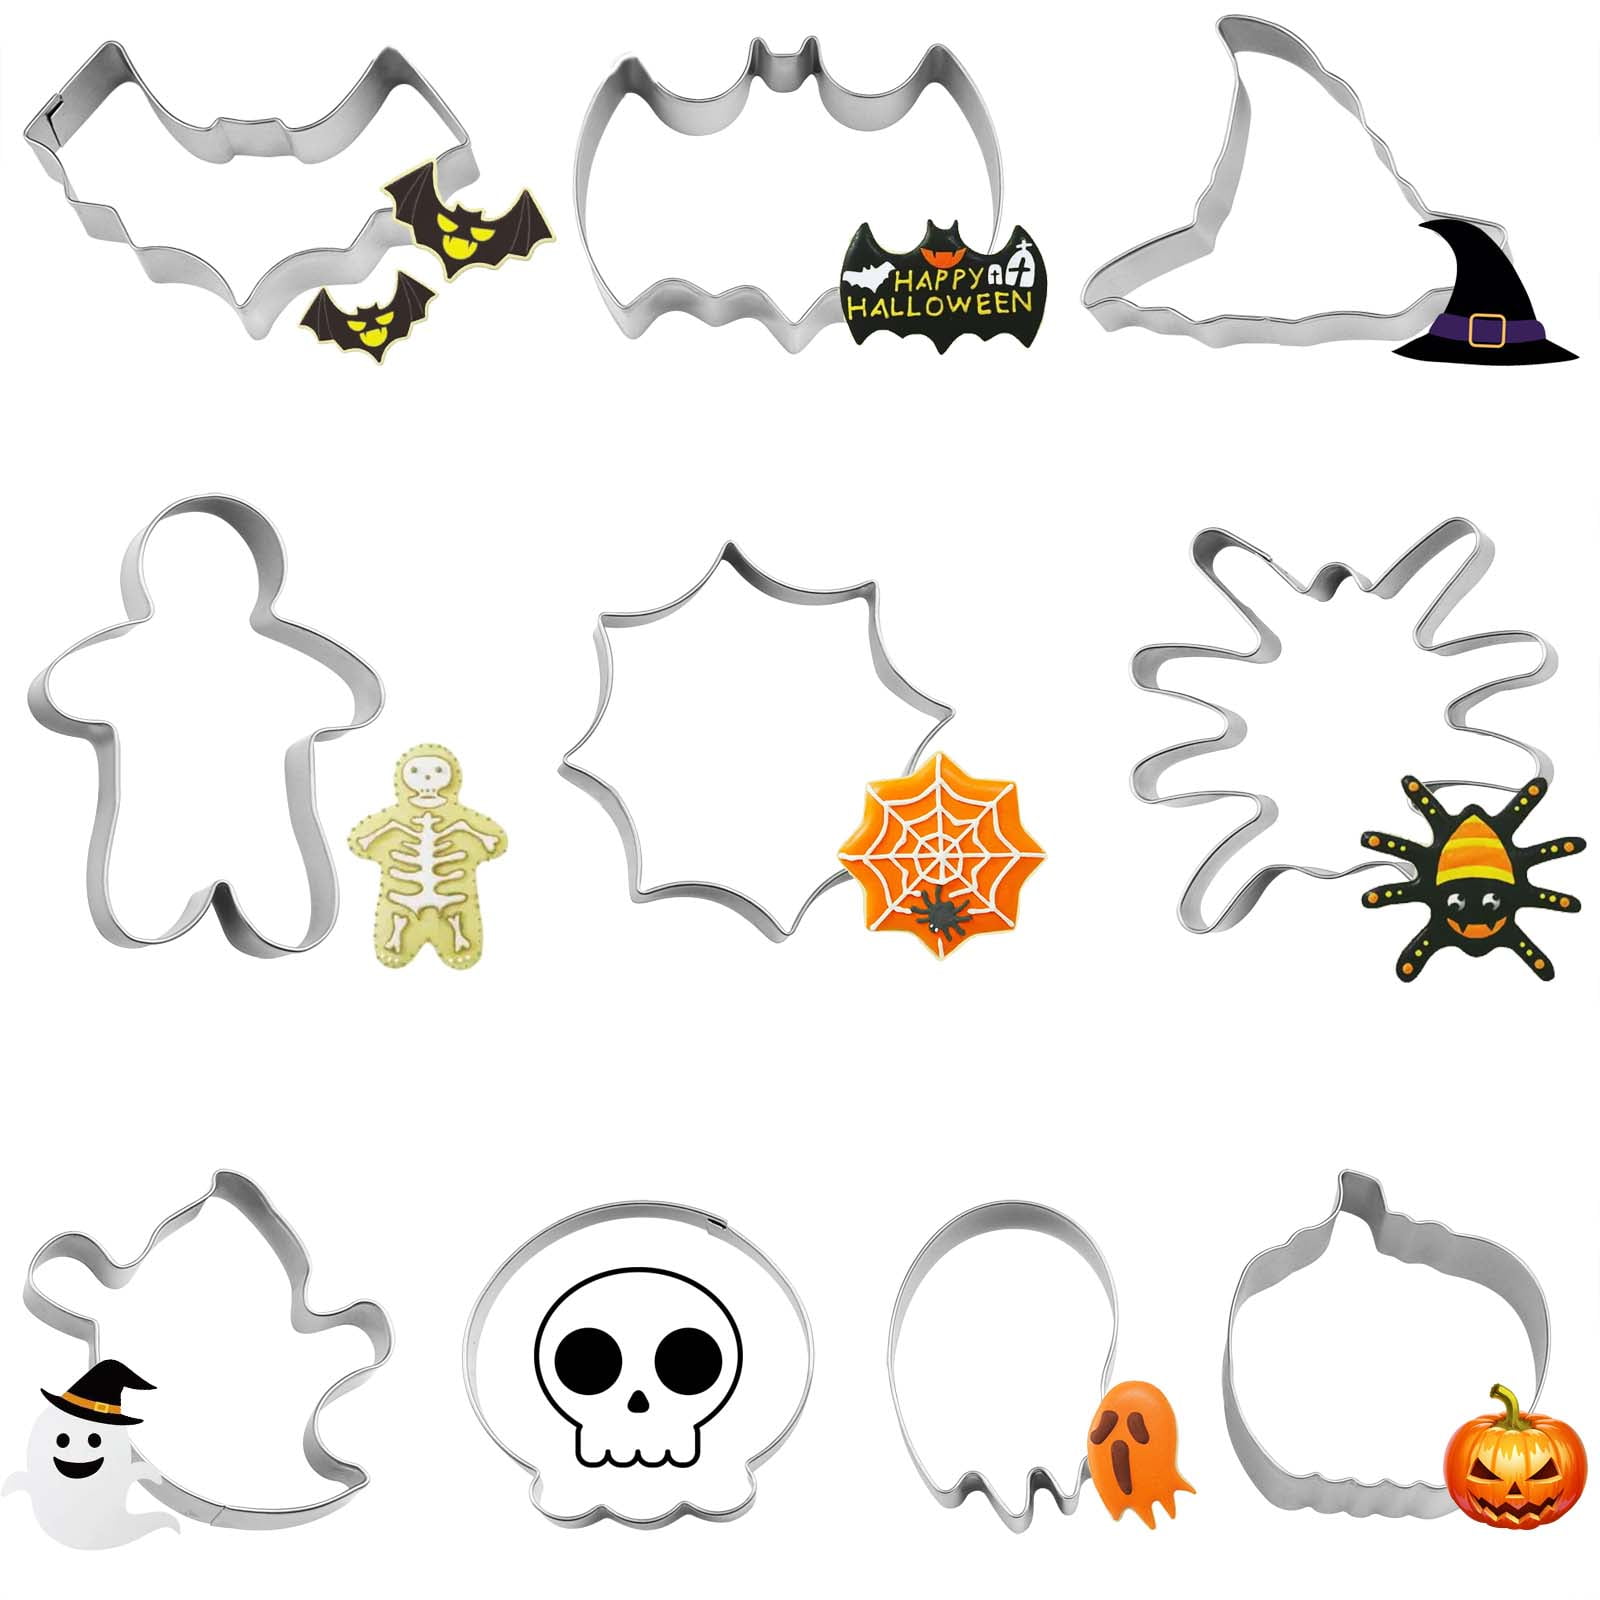 Details about   Halloween Cookie Cutters for Baking Cauldron Bat Pumpkin Web Coffin Spider 7 PCS